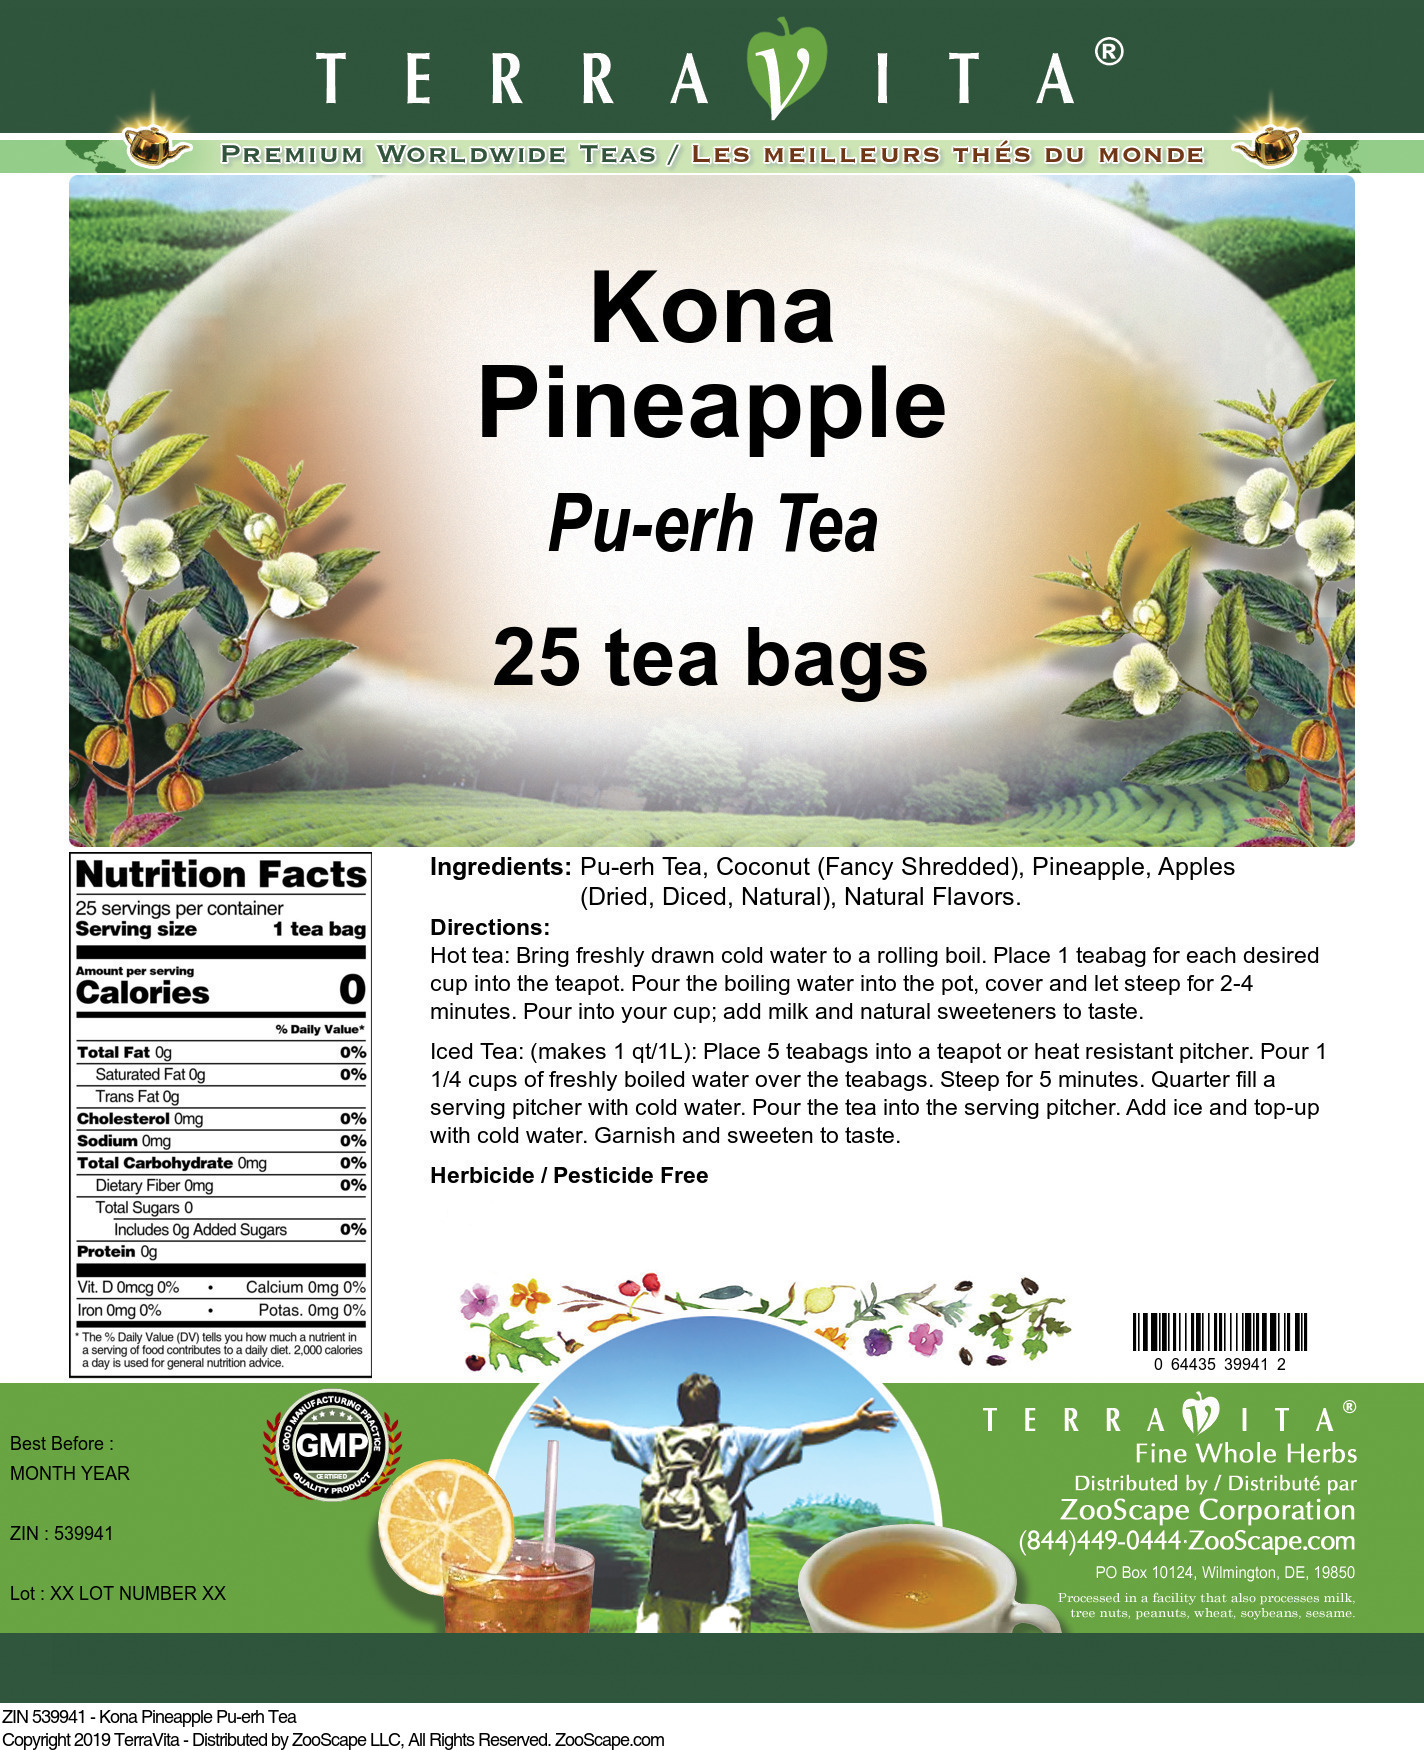 Kona Pineapple Pu-erh Tea - Label